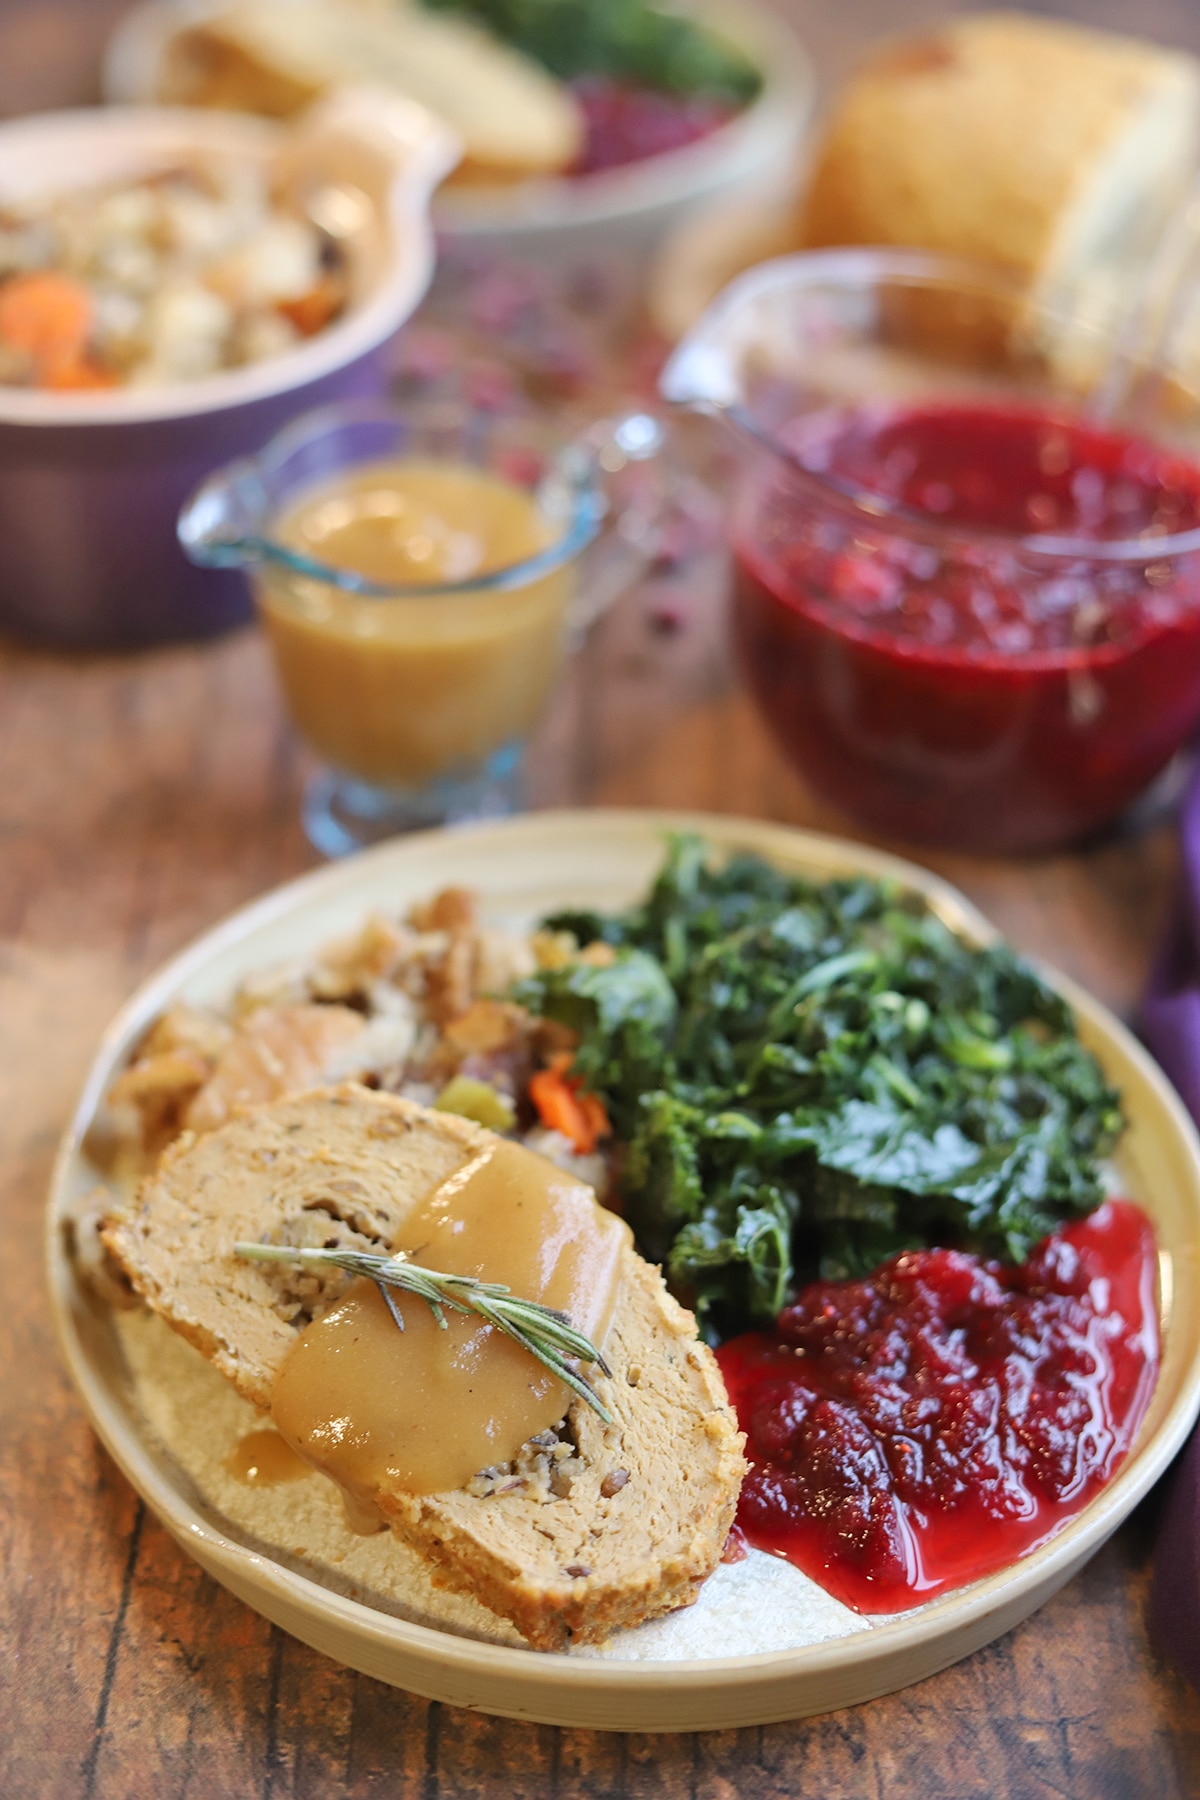 Trader Joe's vegan turkey roast, sauteed kale, and cranberry sauce on plate.